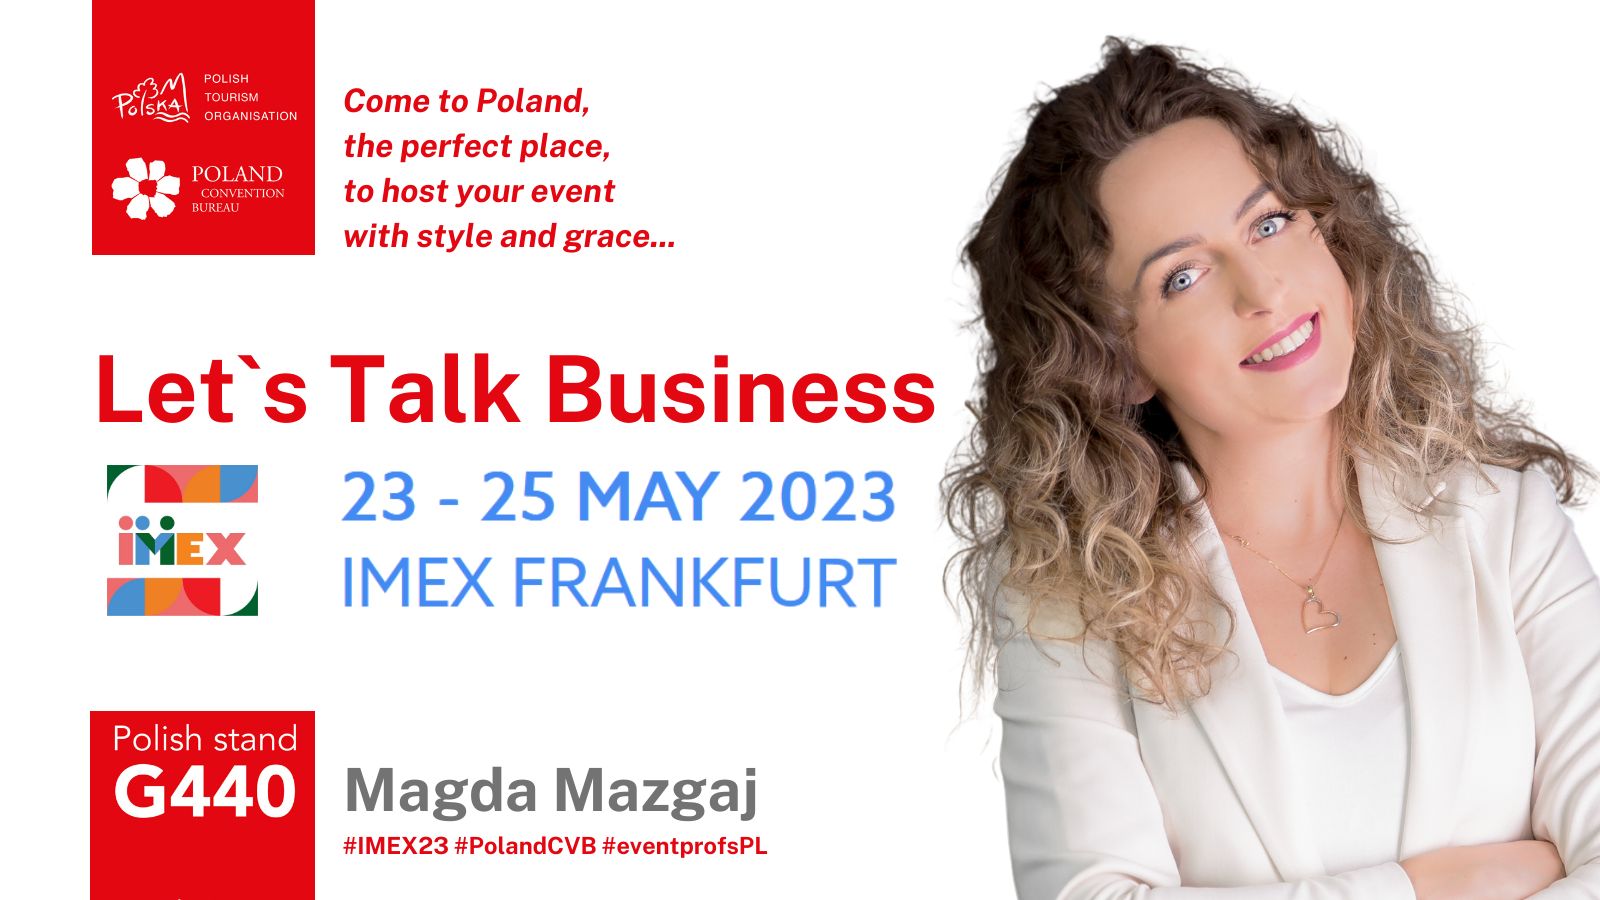 IMEX FRANKFURT 2023 POLAND CONVENTION BUREAU MAGDA MAZGAJ